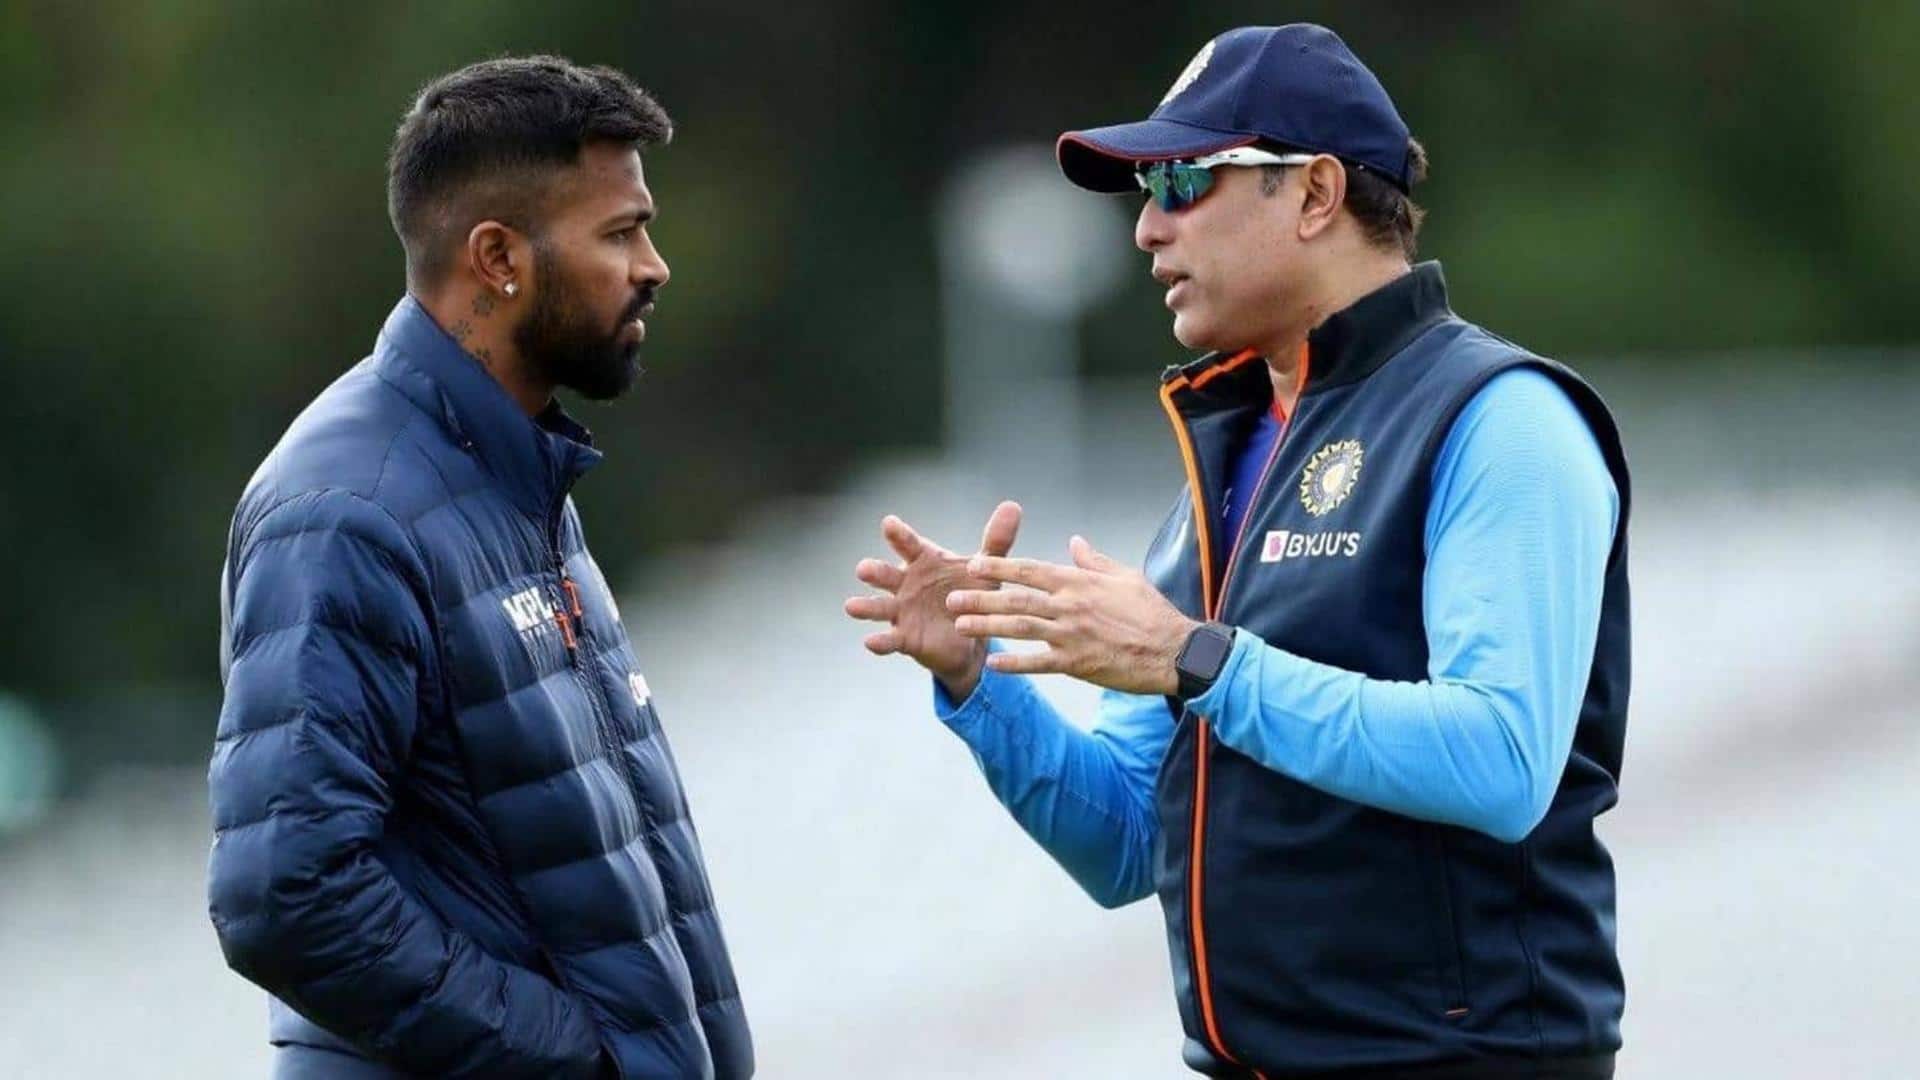 VVS Laxman to coach Team India on NZ tour: Report